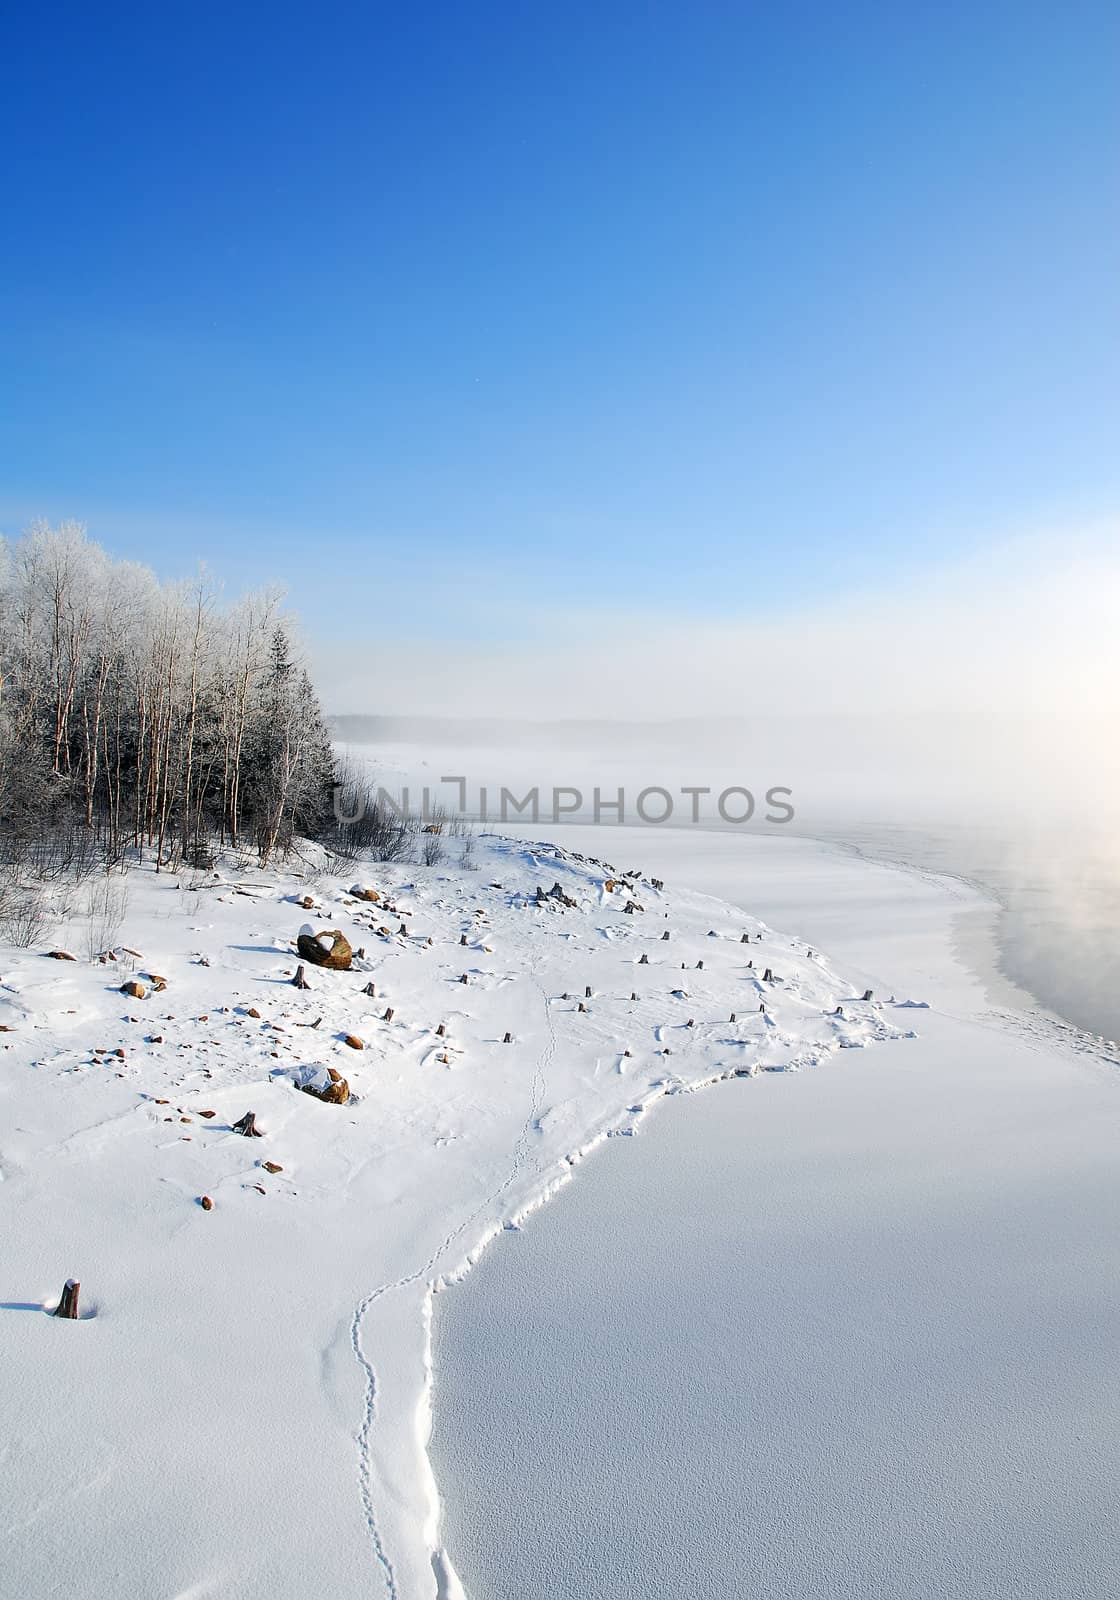 Winter wonderland by nialat